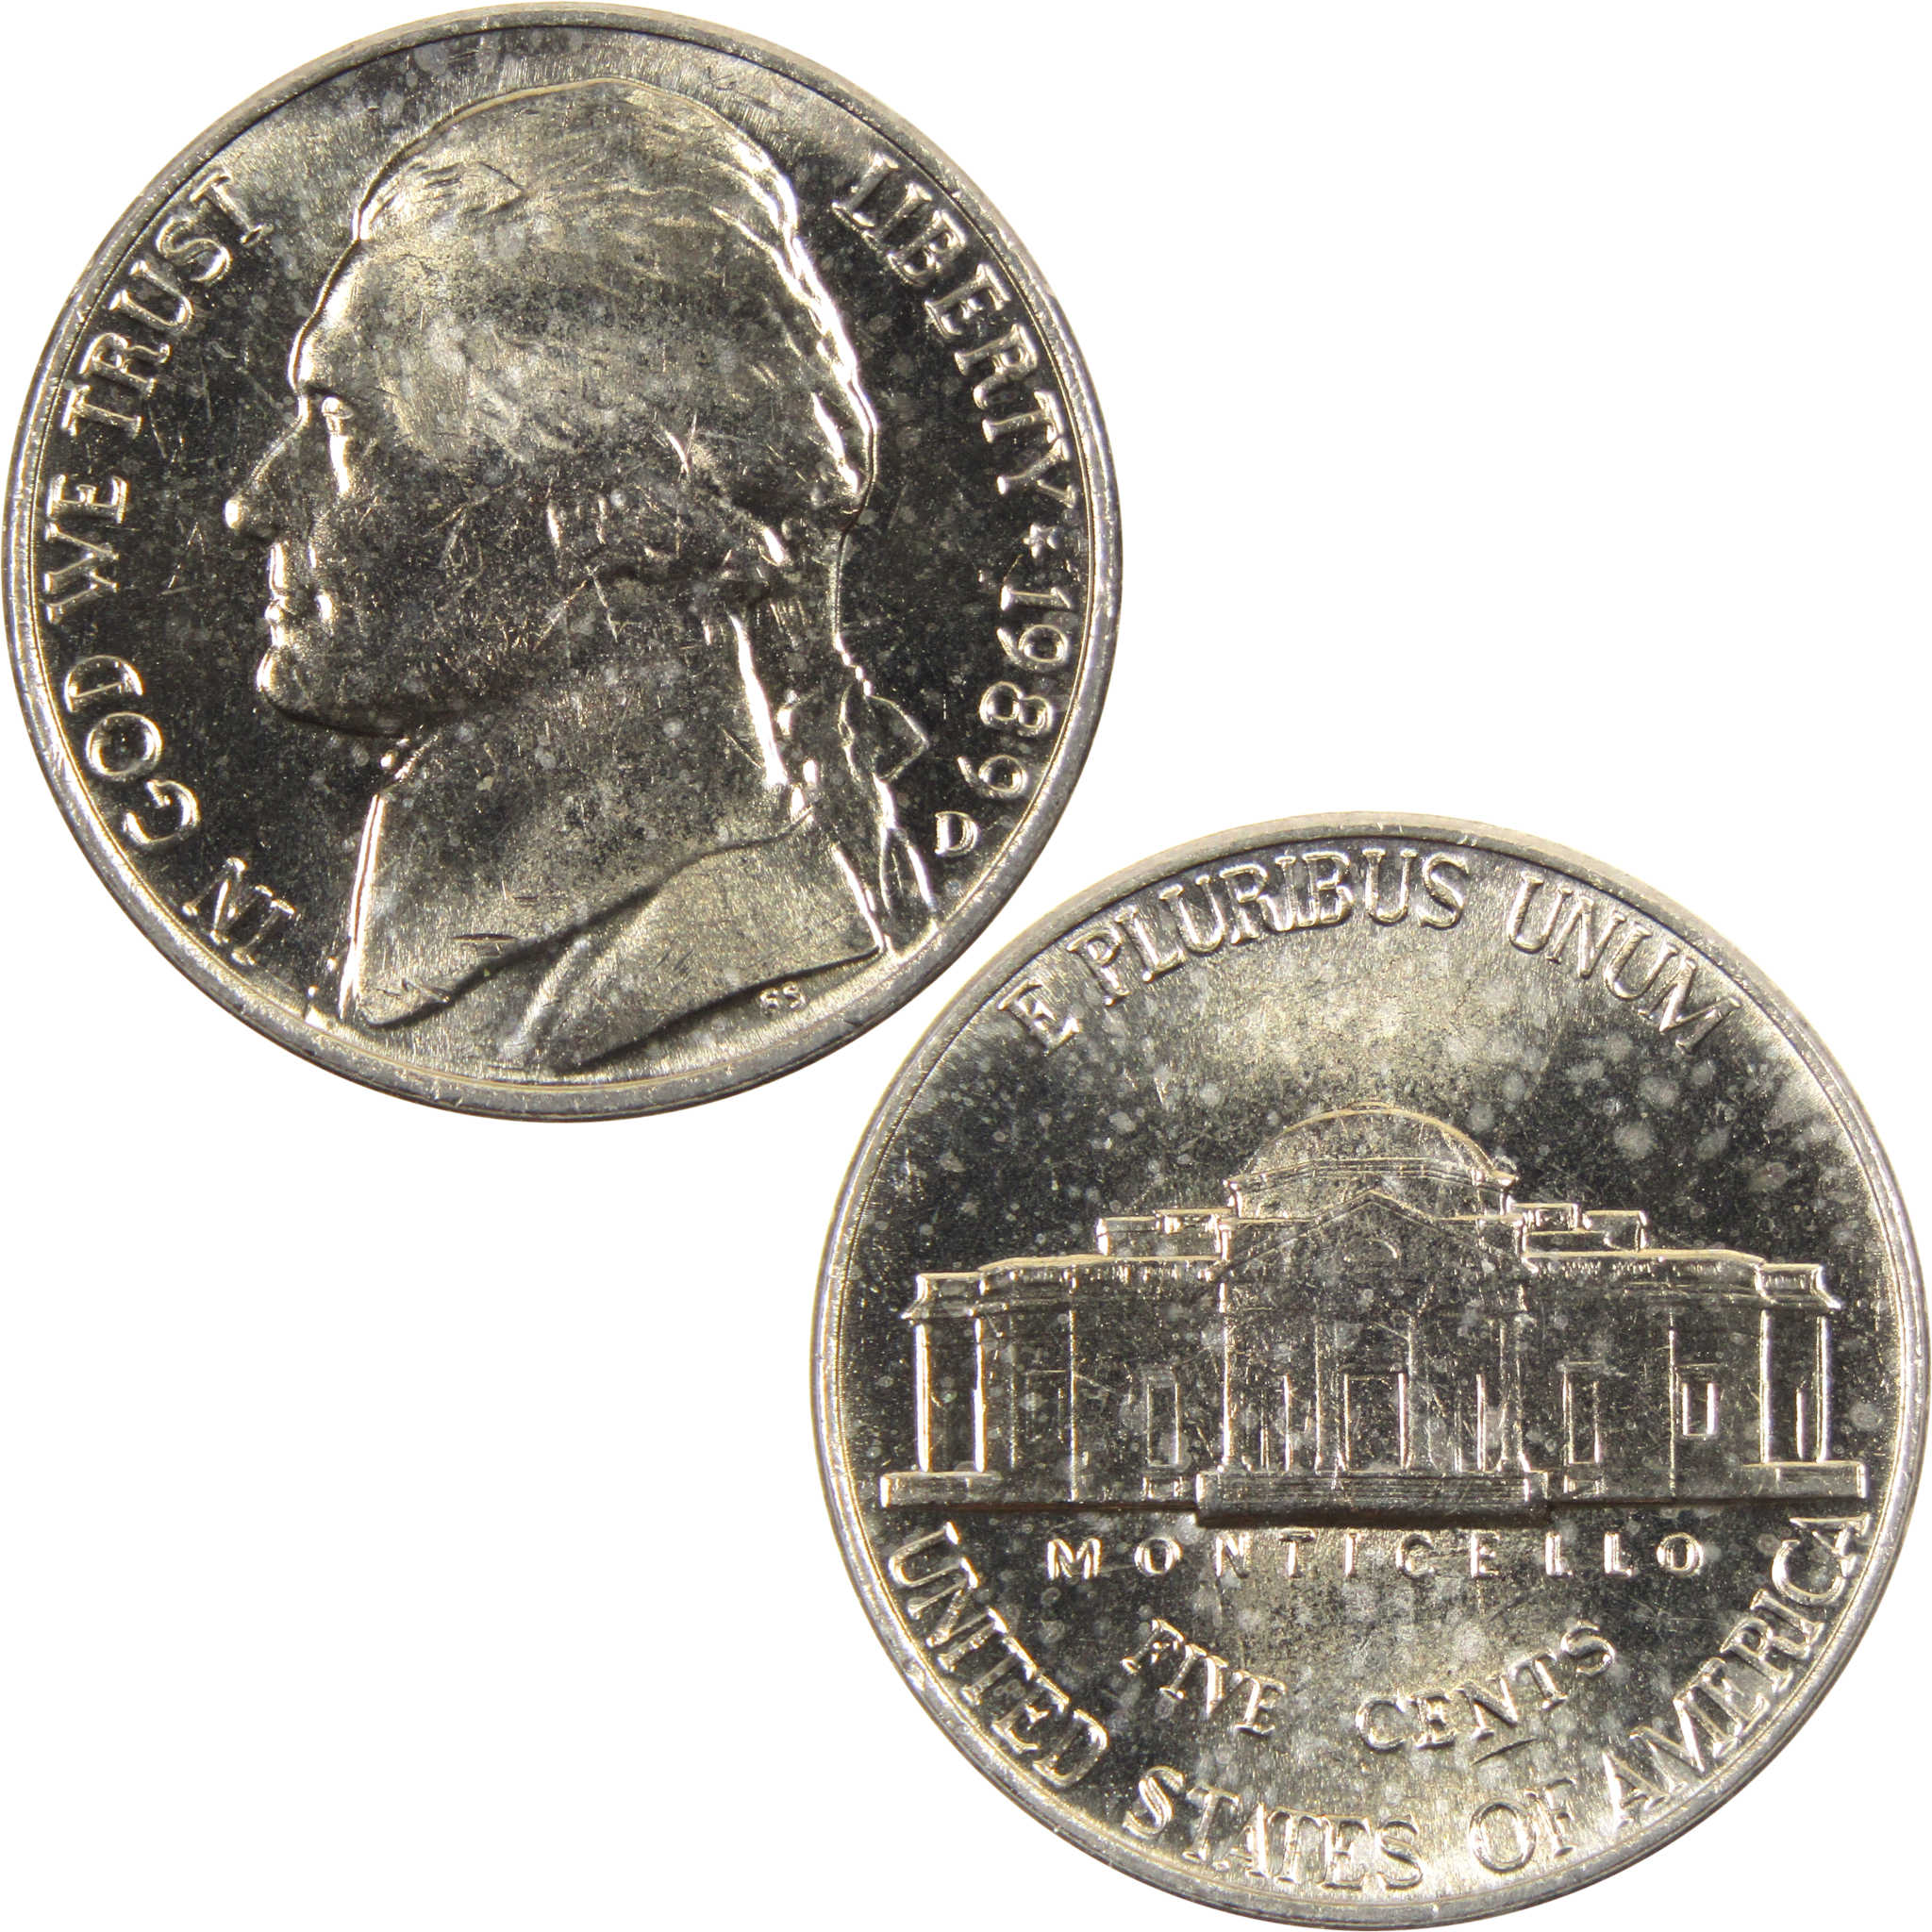 1989 D Jefferson Nickel BU Uncirculated 5c Coin